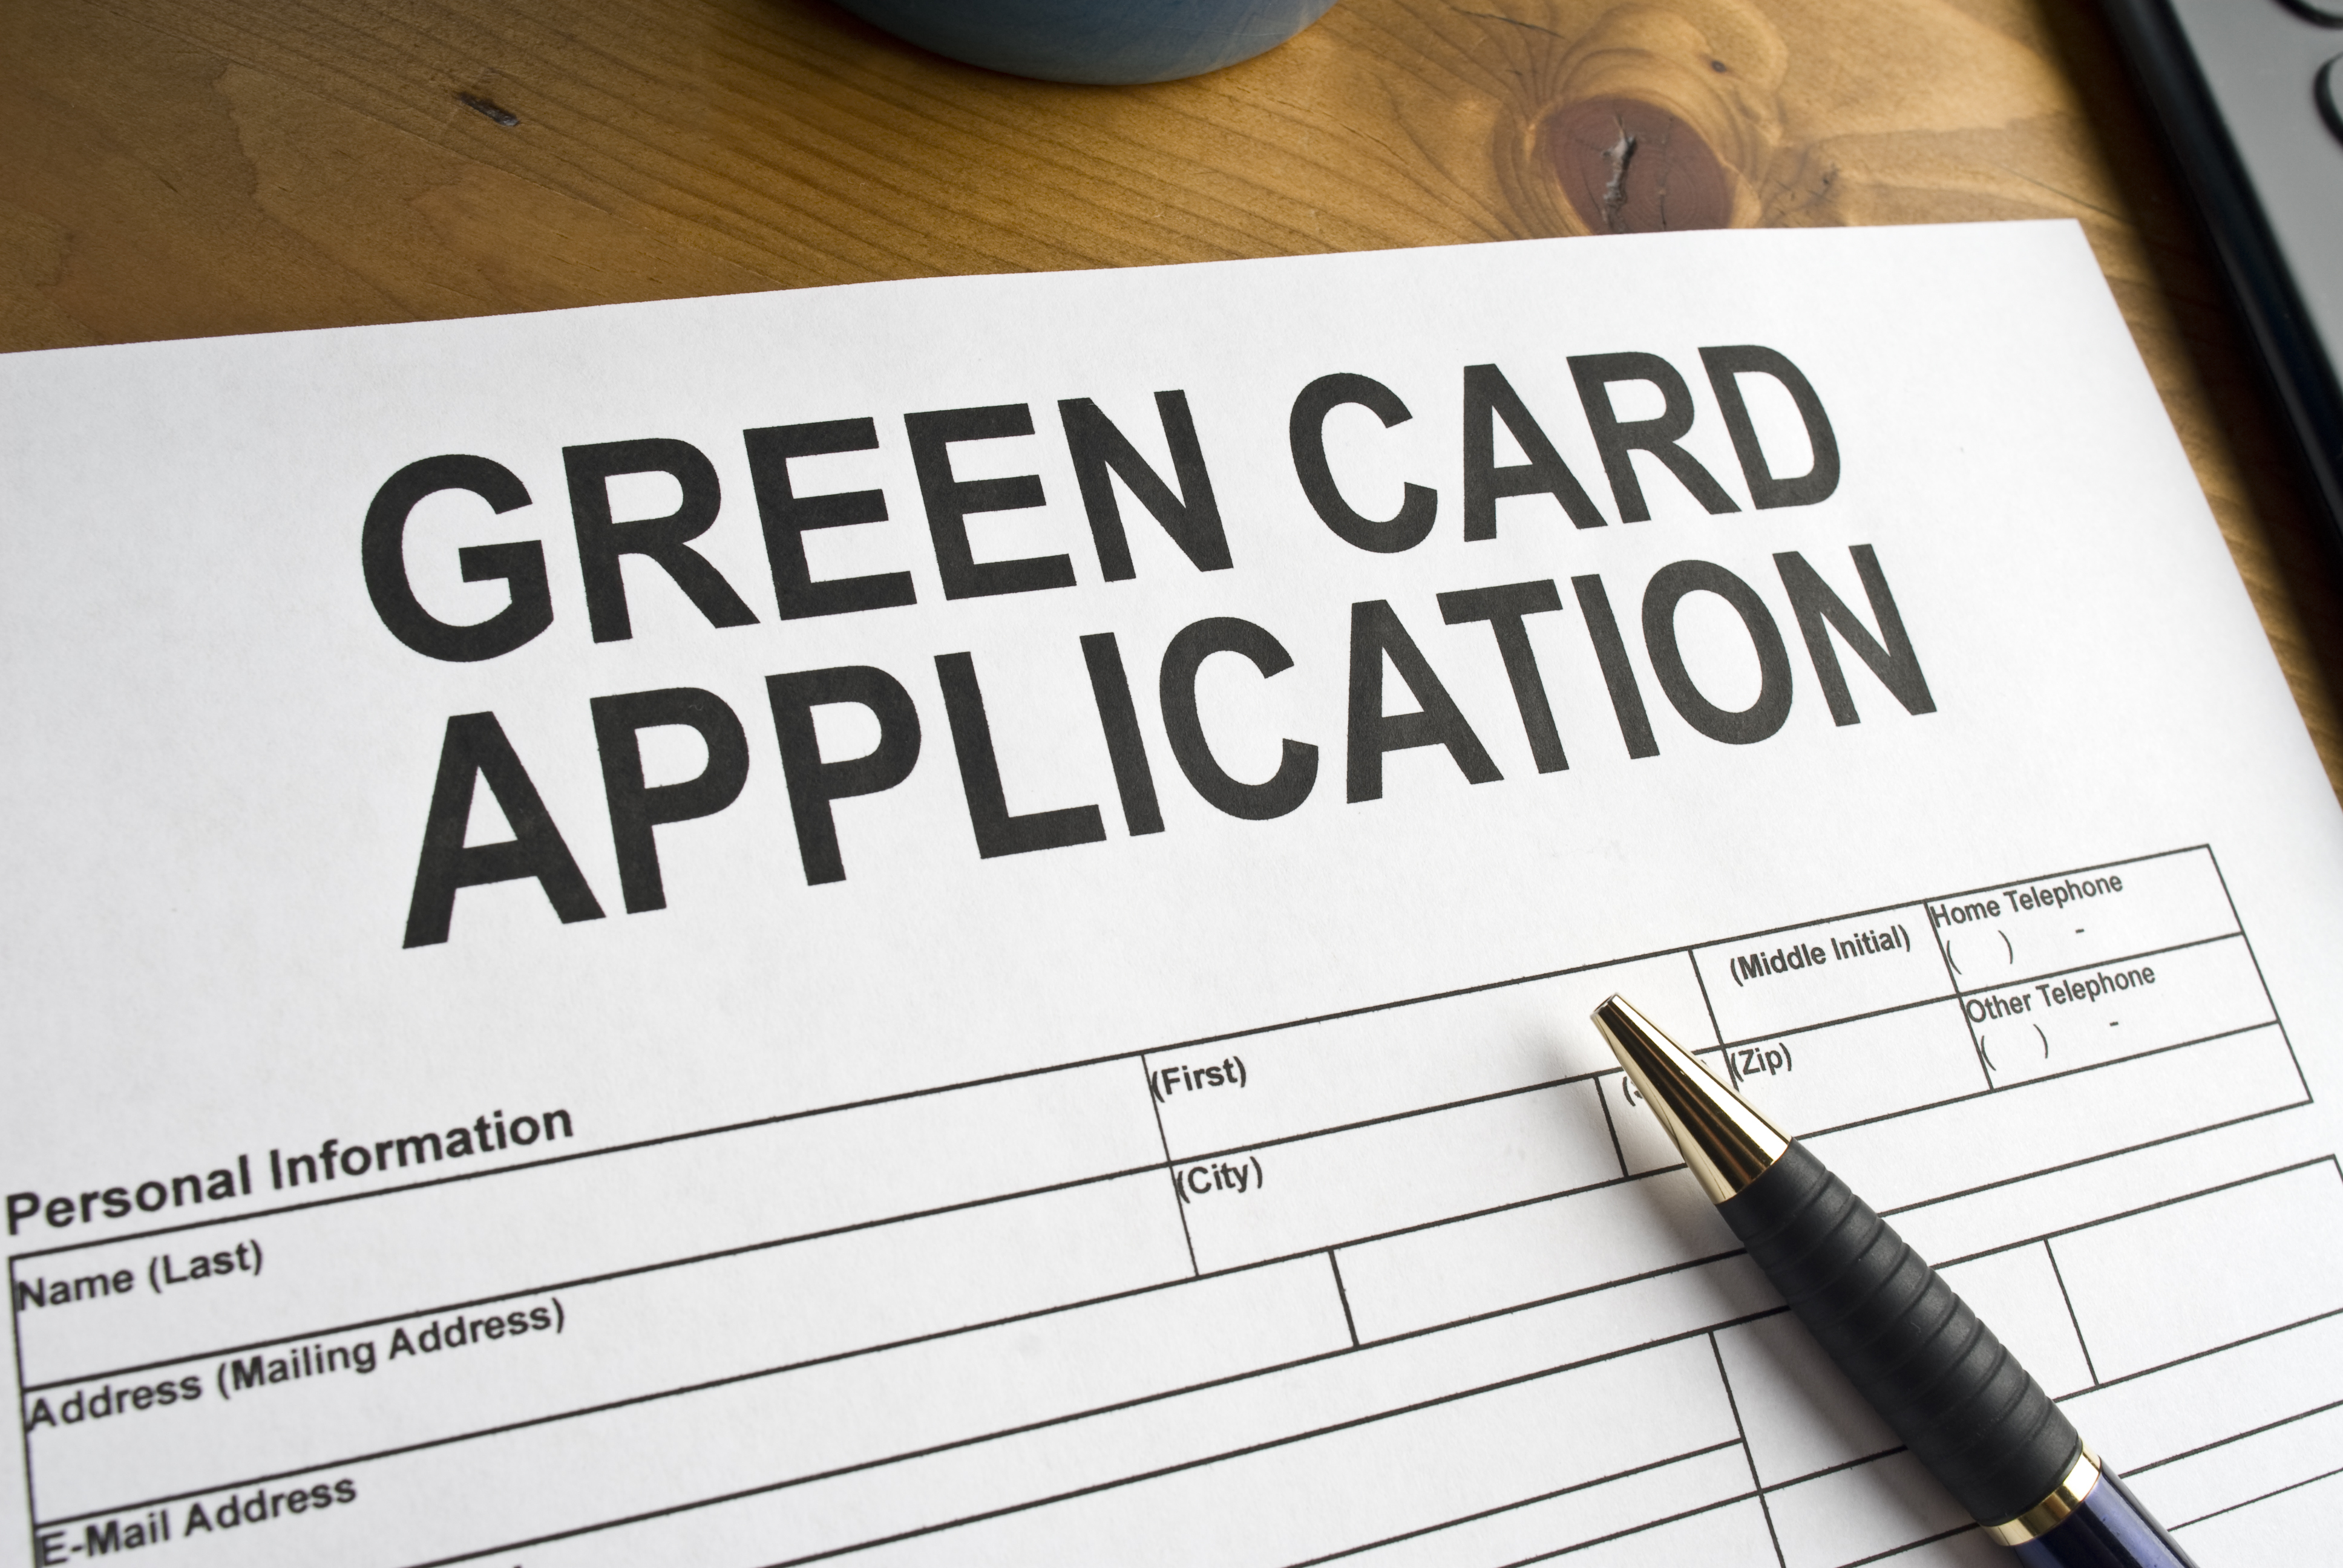 A Green Card application form